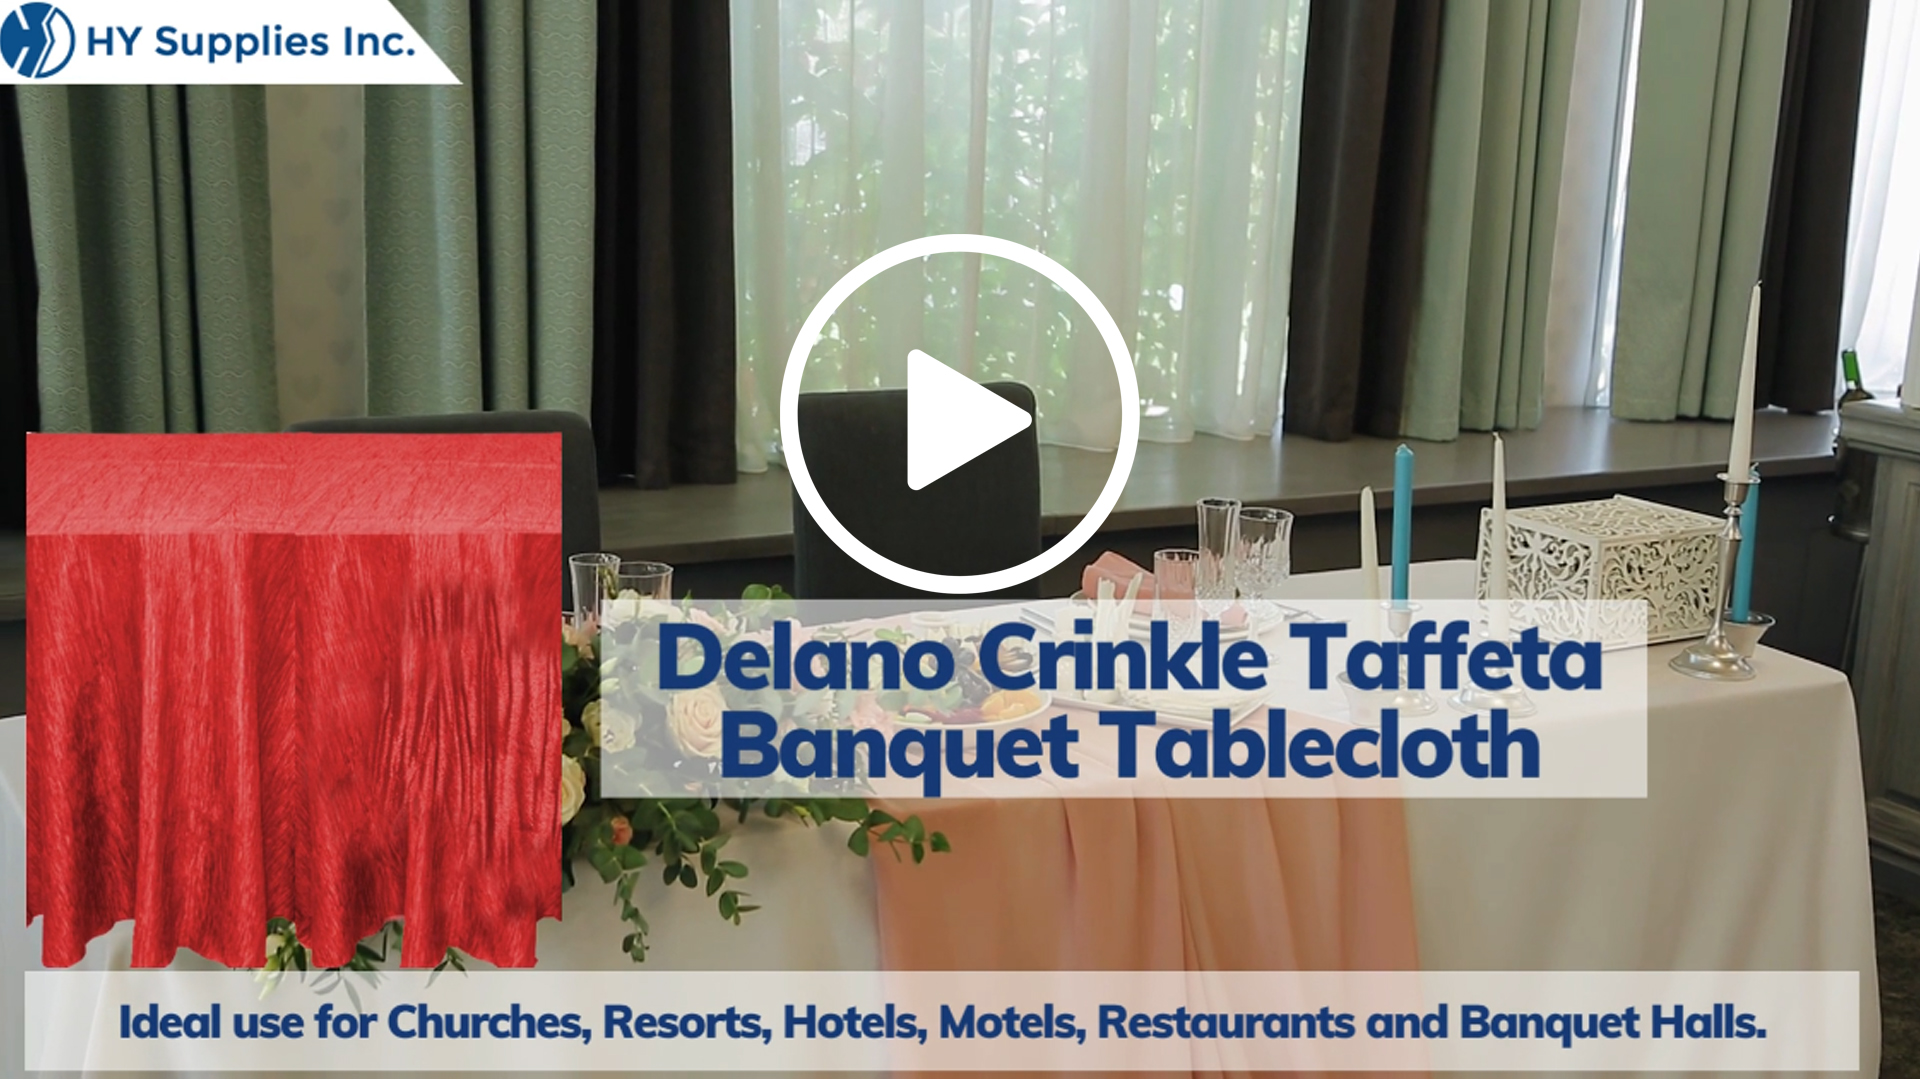 Delano Crinkle Taffeta Banquet Tablecloth